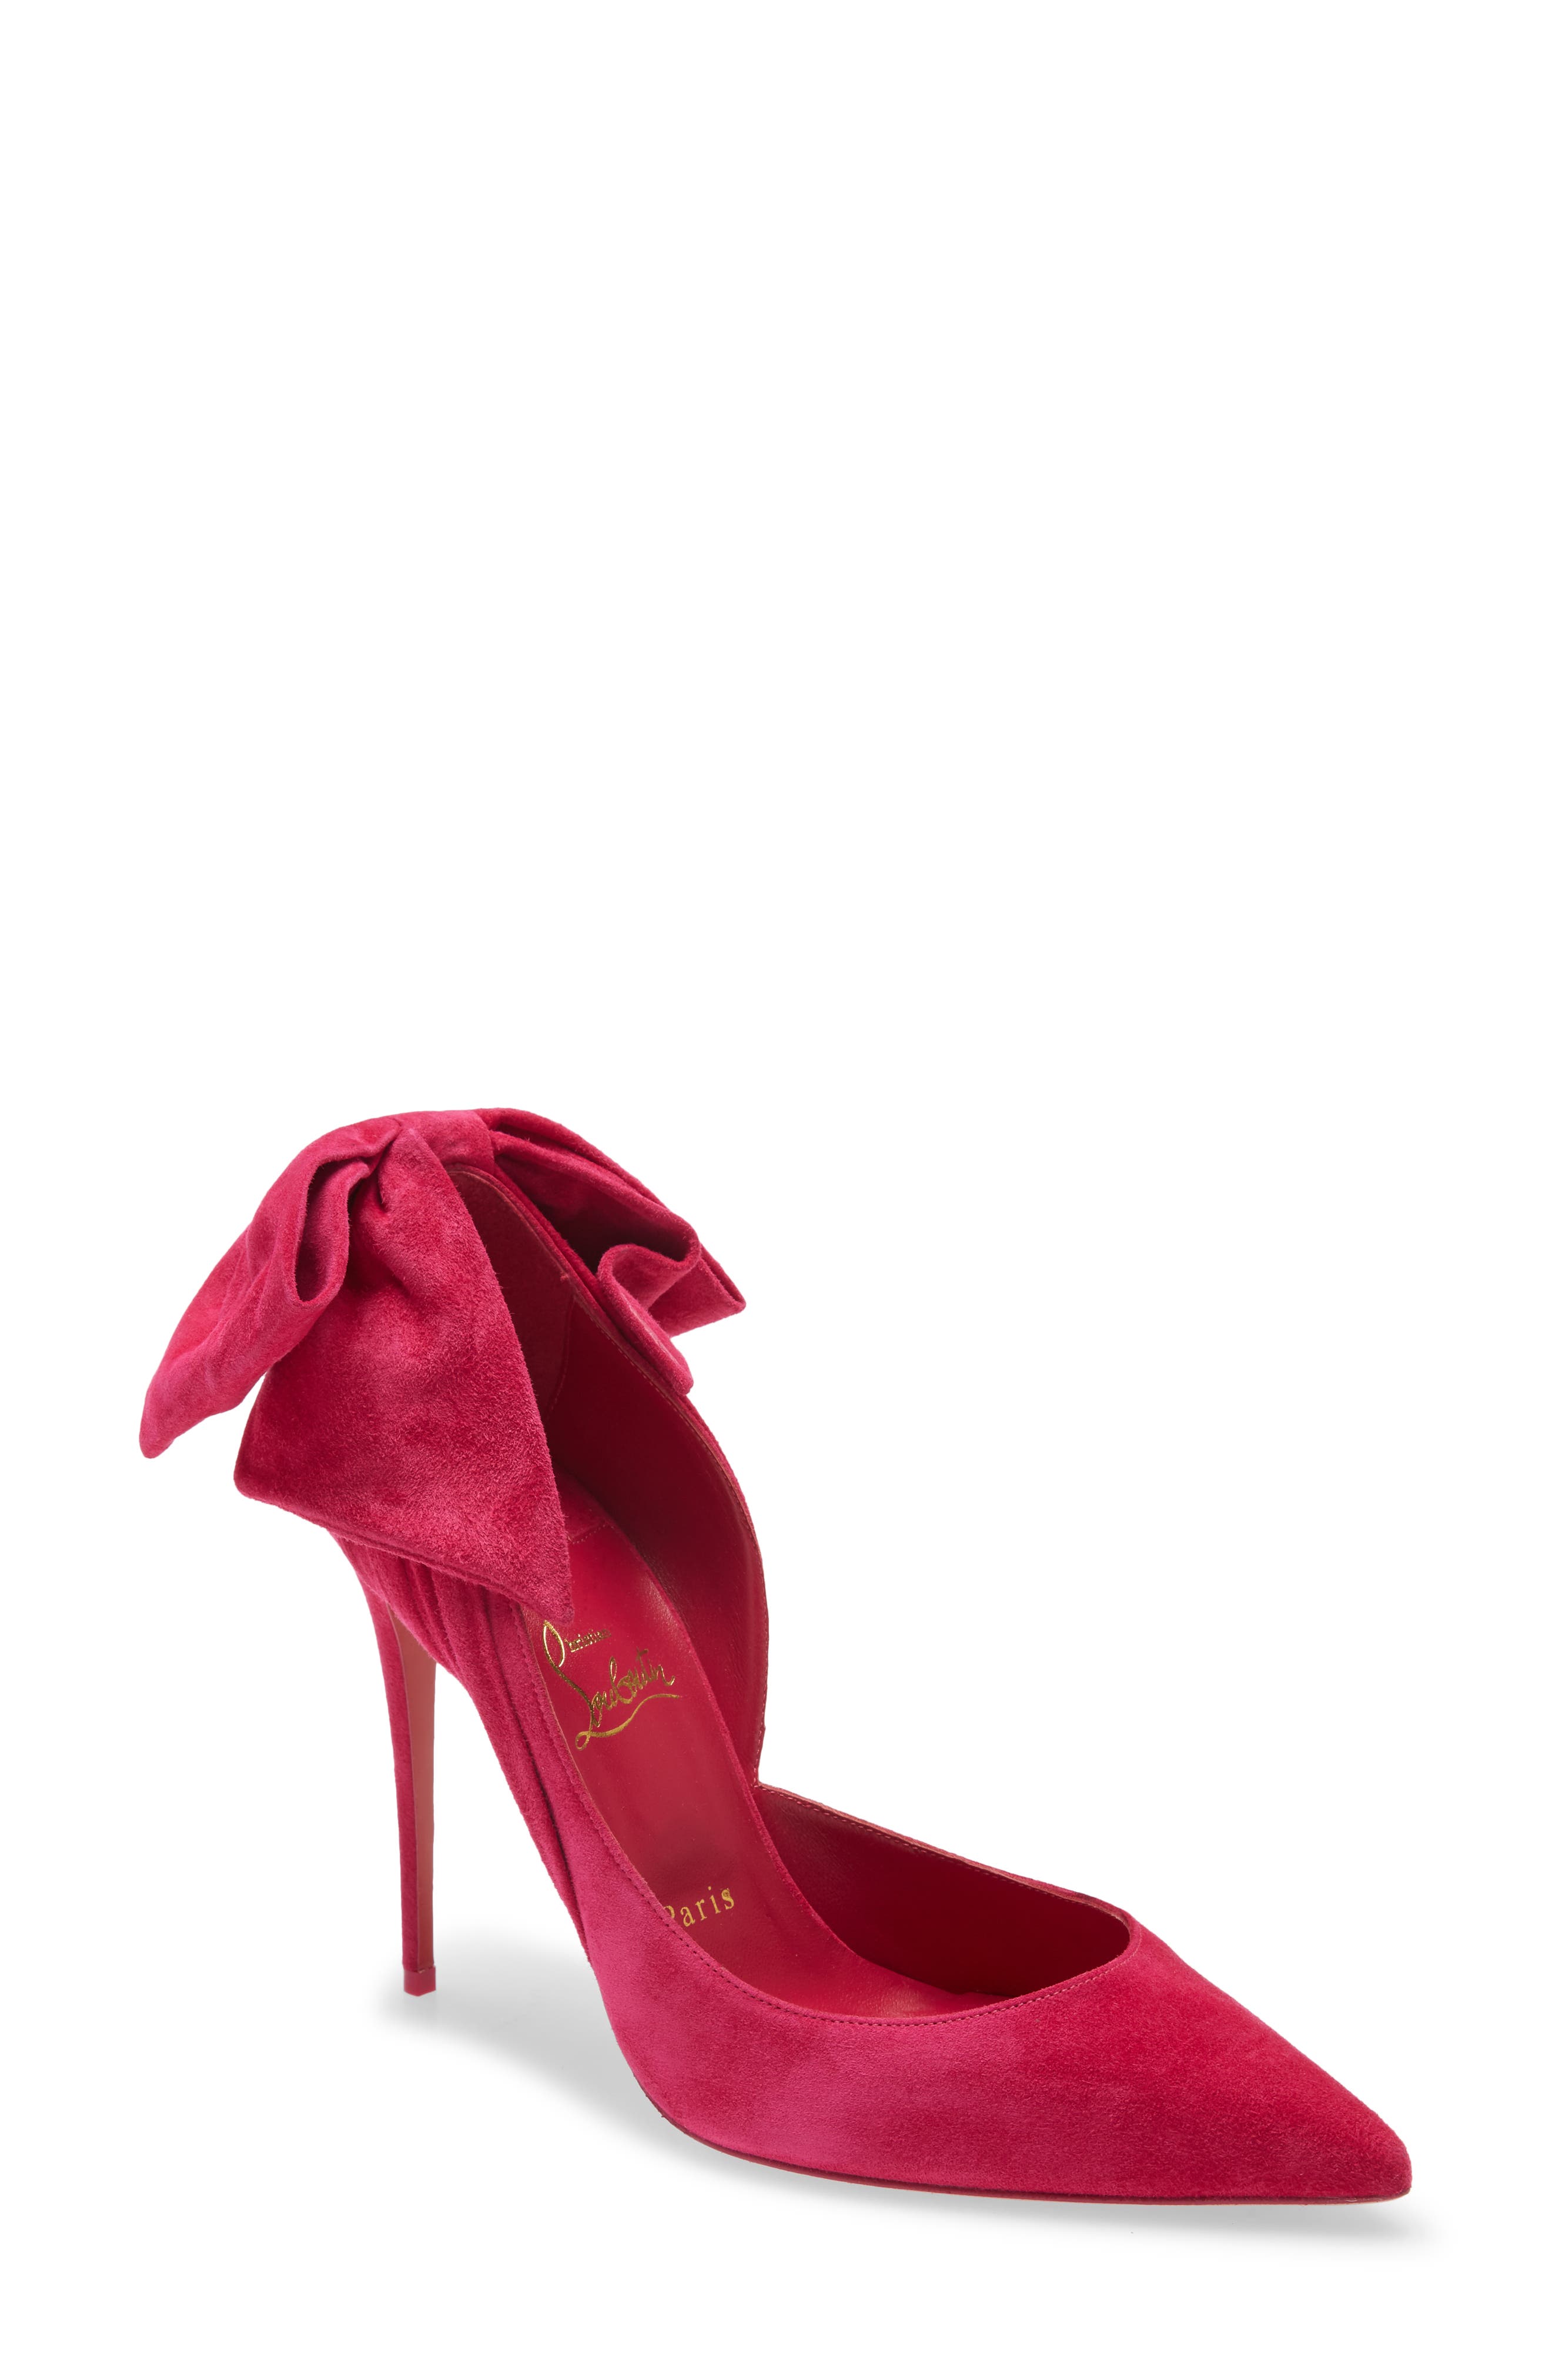 luminous pink heels